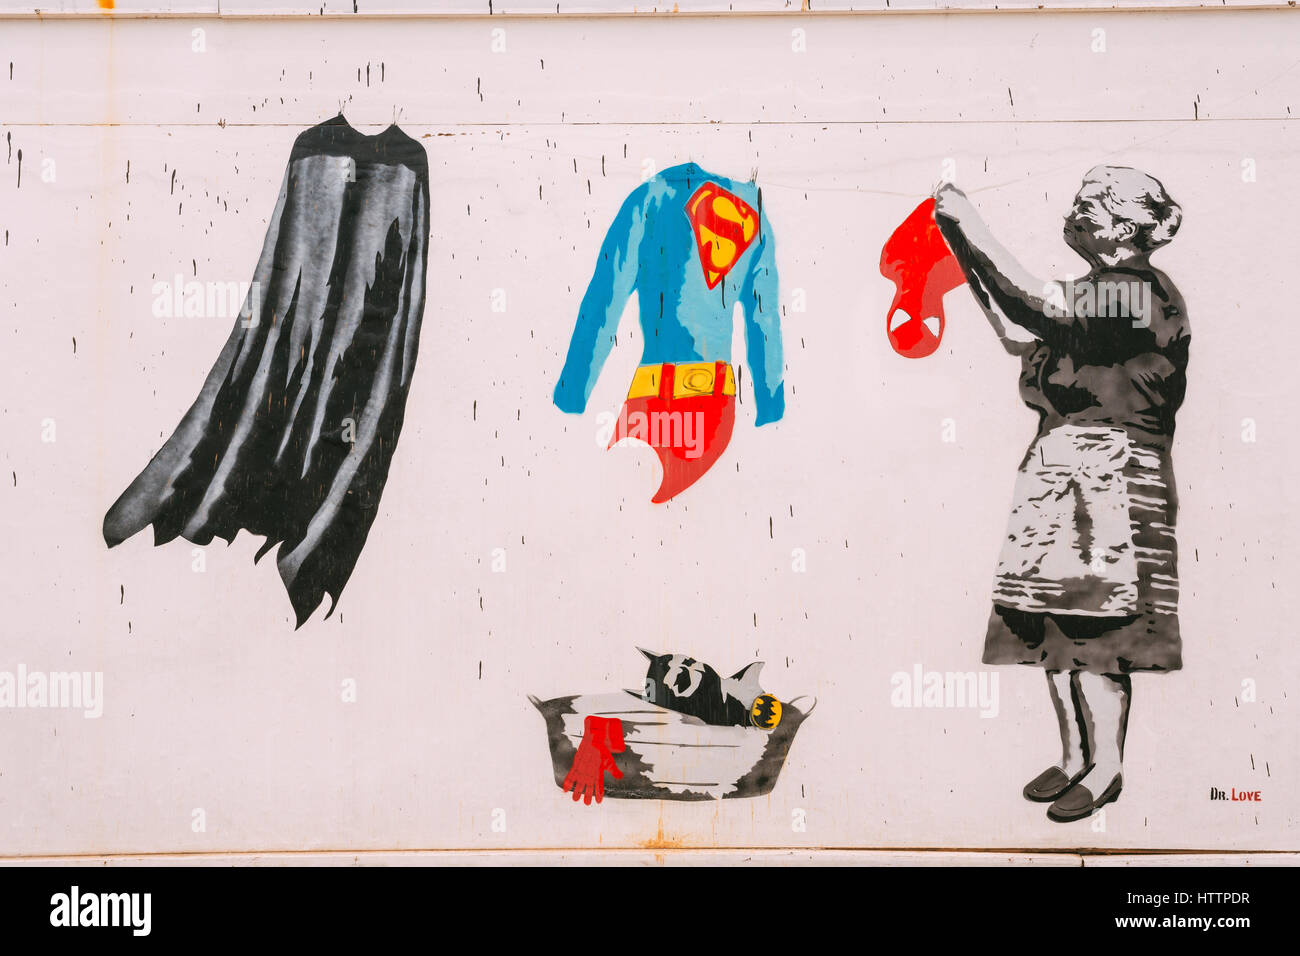 Batumi, Adjara, Georgia. Street graffiti by Dr. Love with Grandmother hanging clothes suits of superheroes - Batman's raincoat, Superman's clothes and Stock Photo